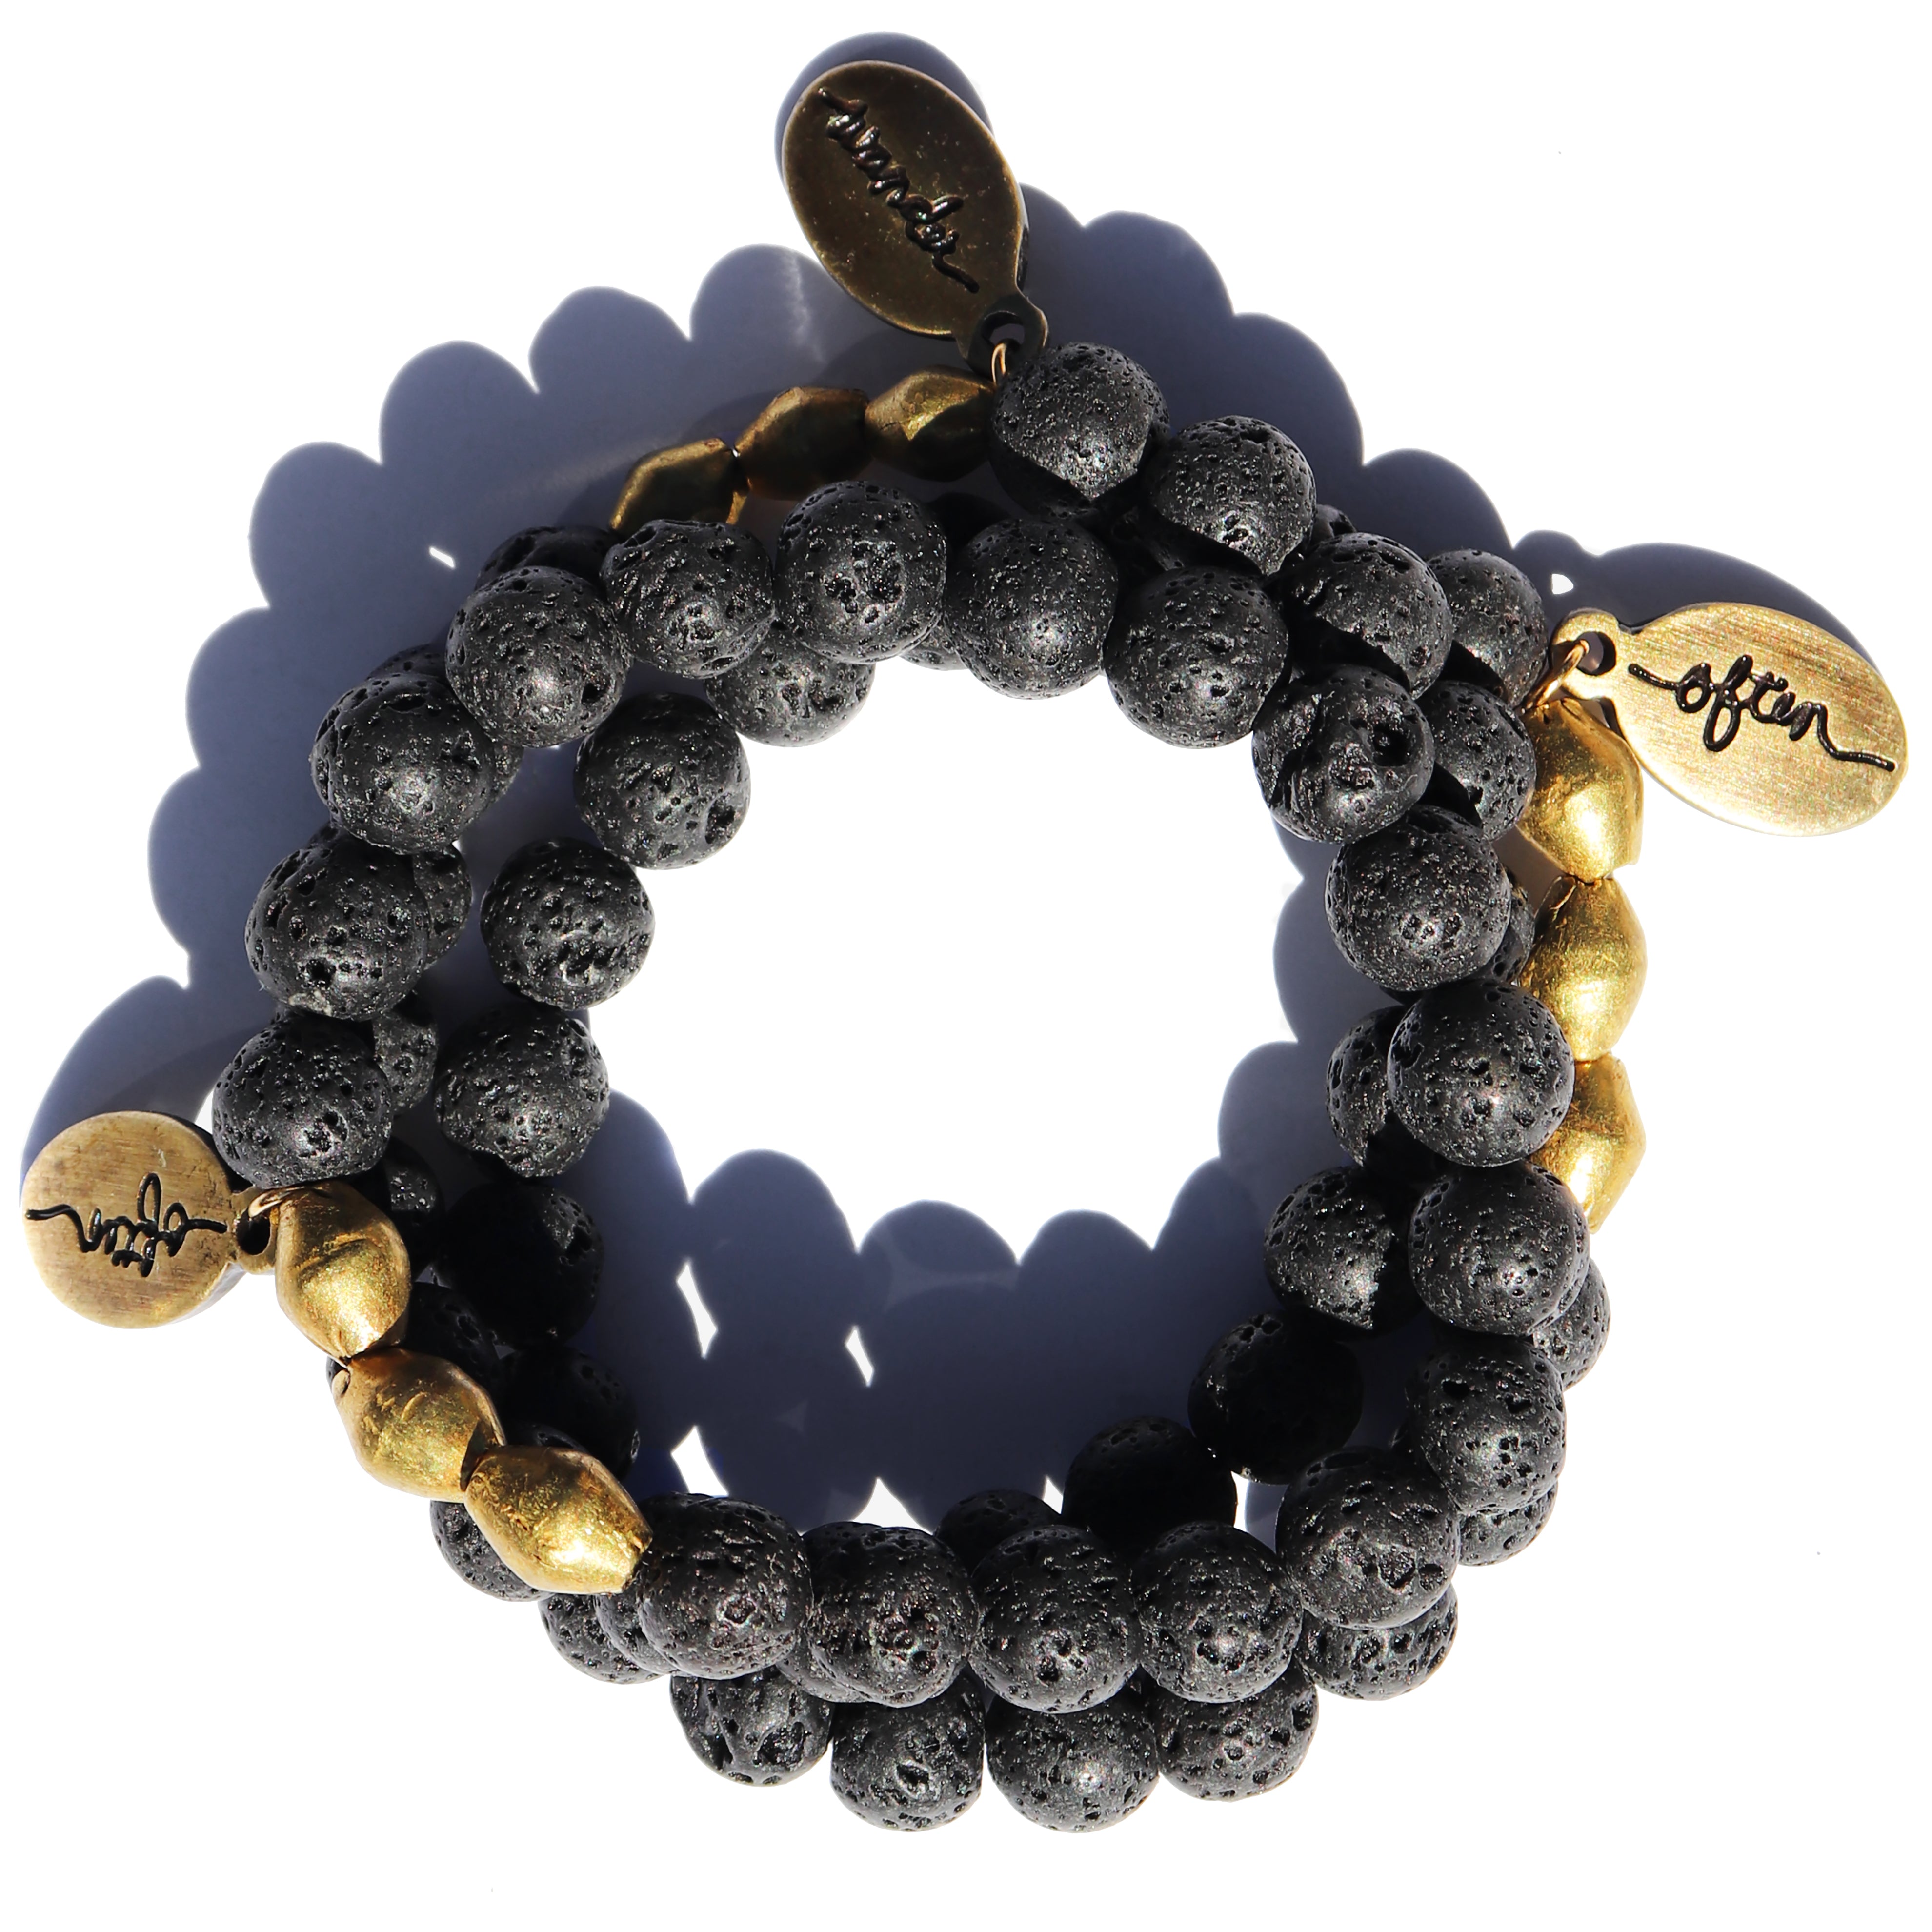 Buy The Purple Agate and Flower Center Bead Bracelet | JaeBee Jewelry 7 - 8